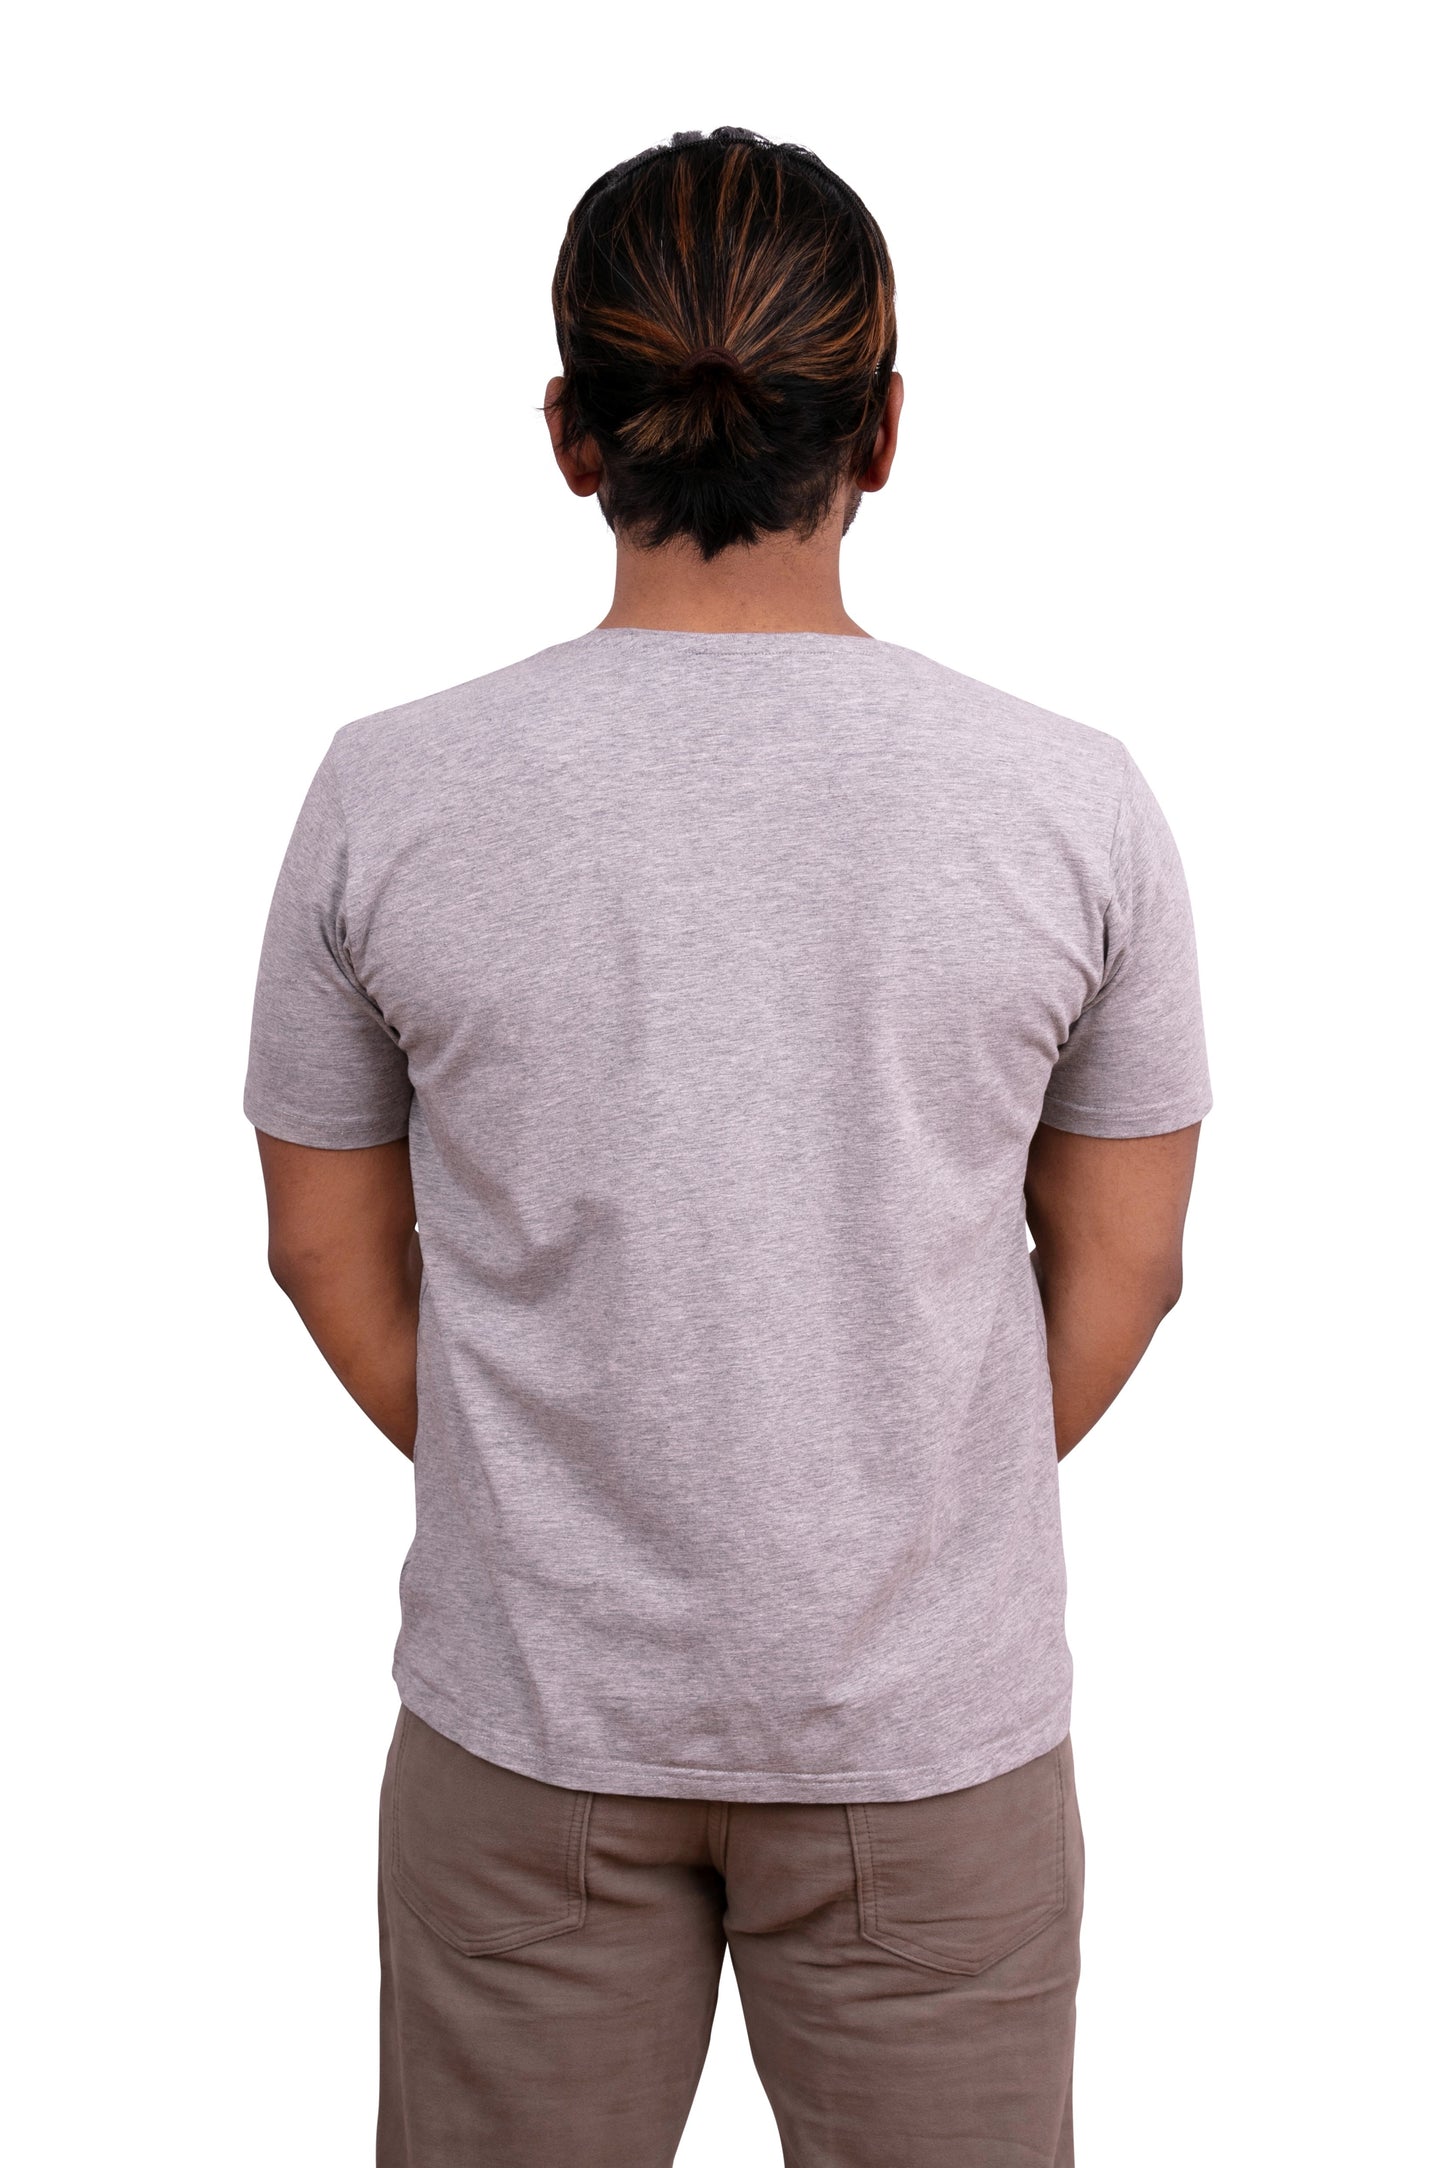 Premium Cotton T-Shirt